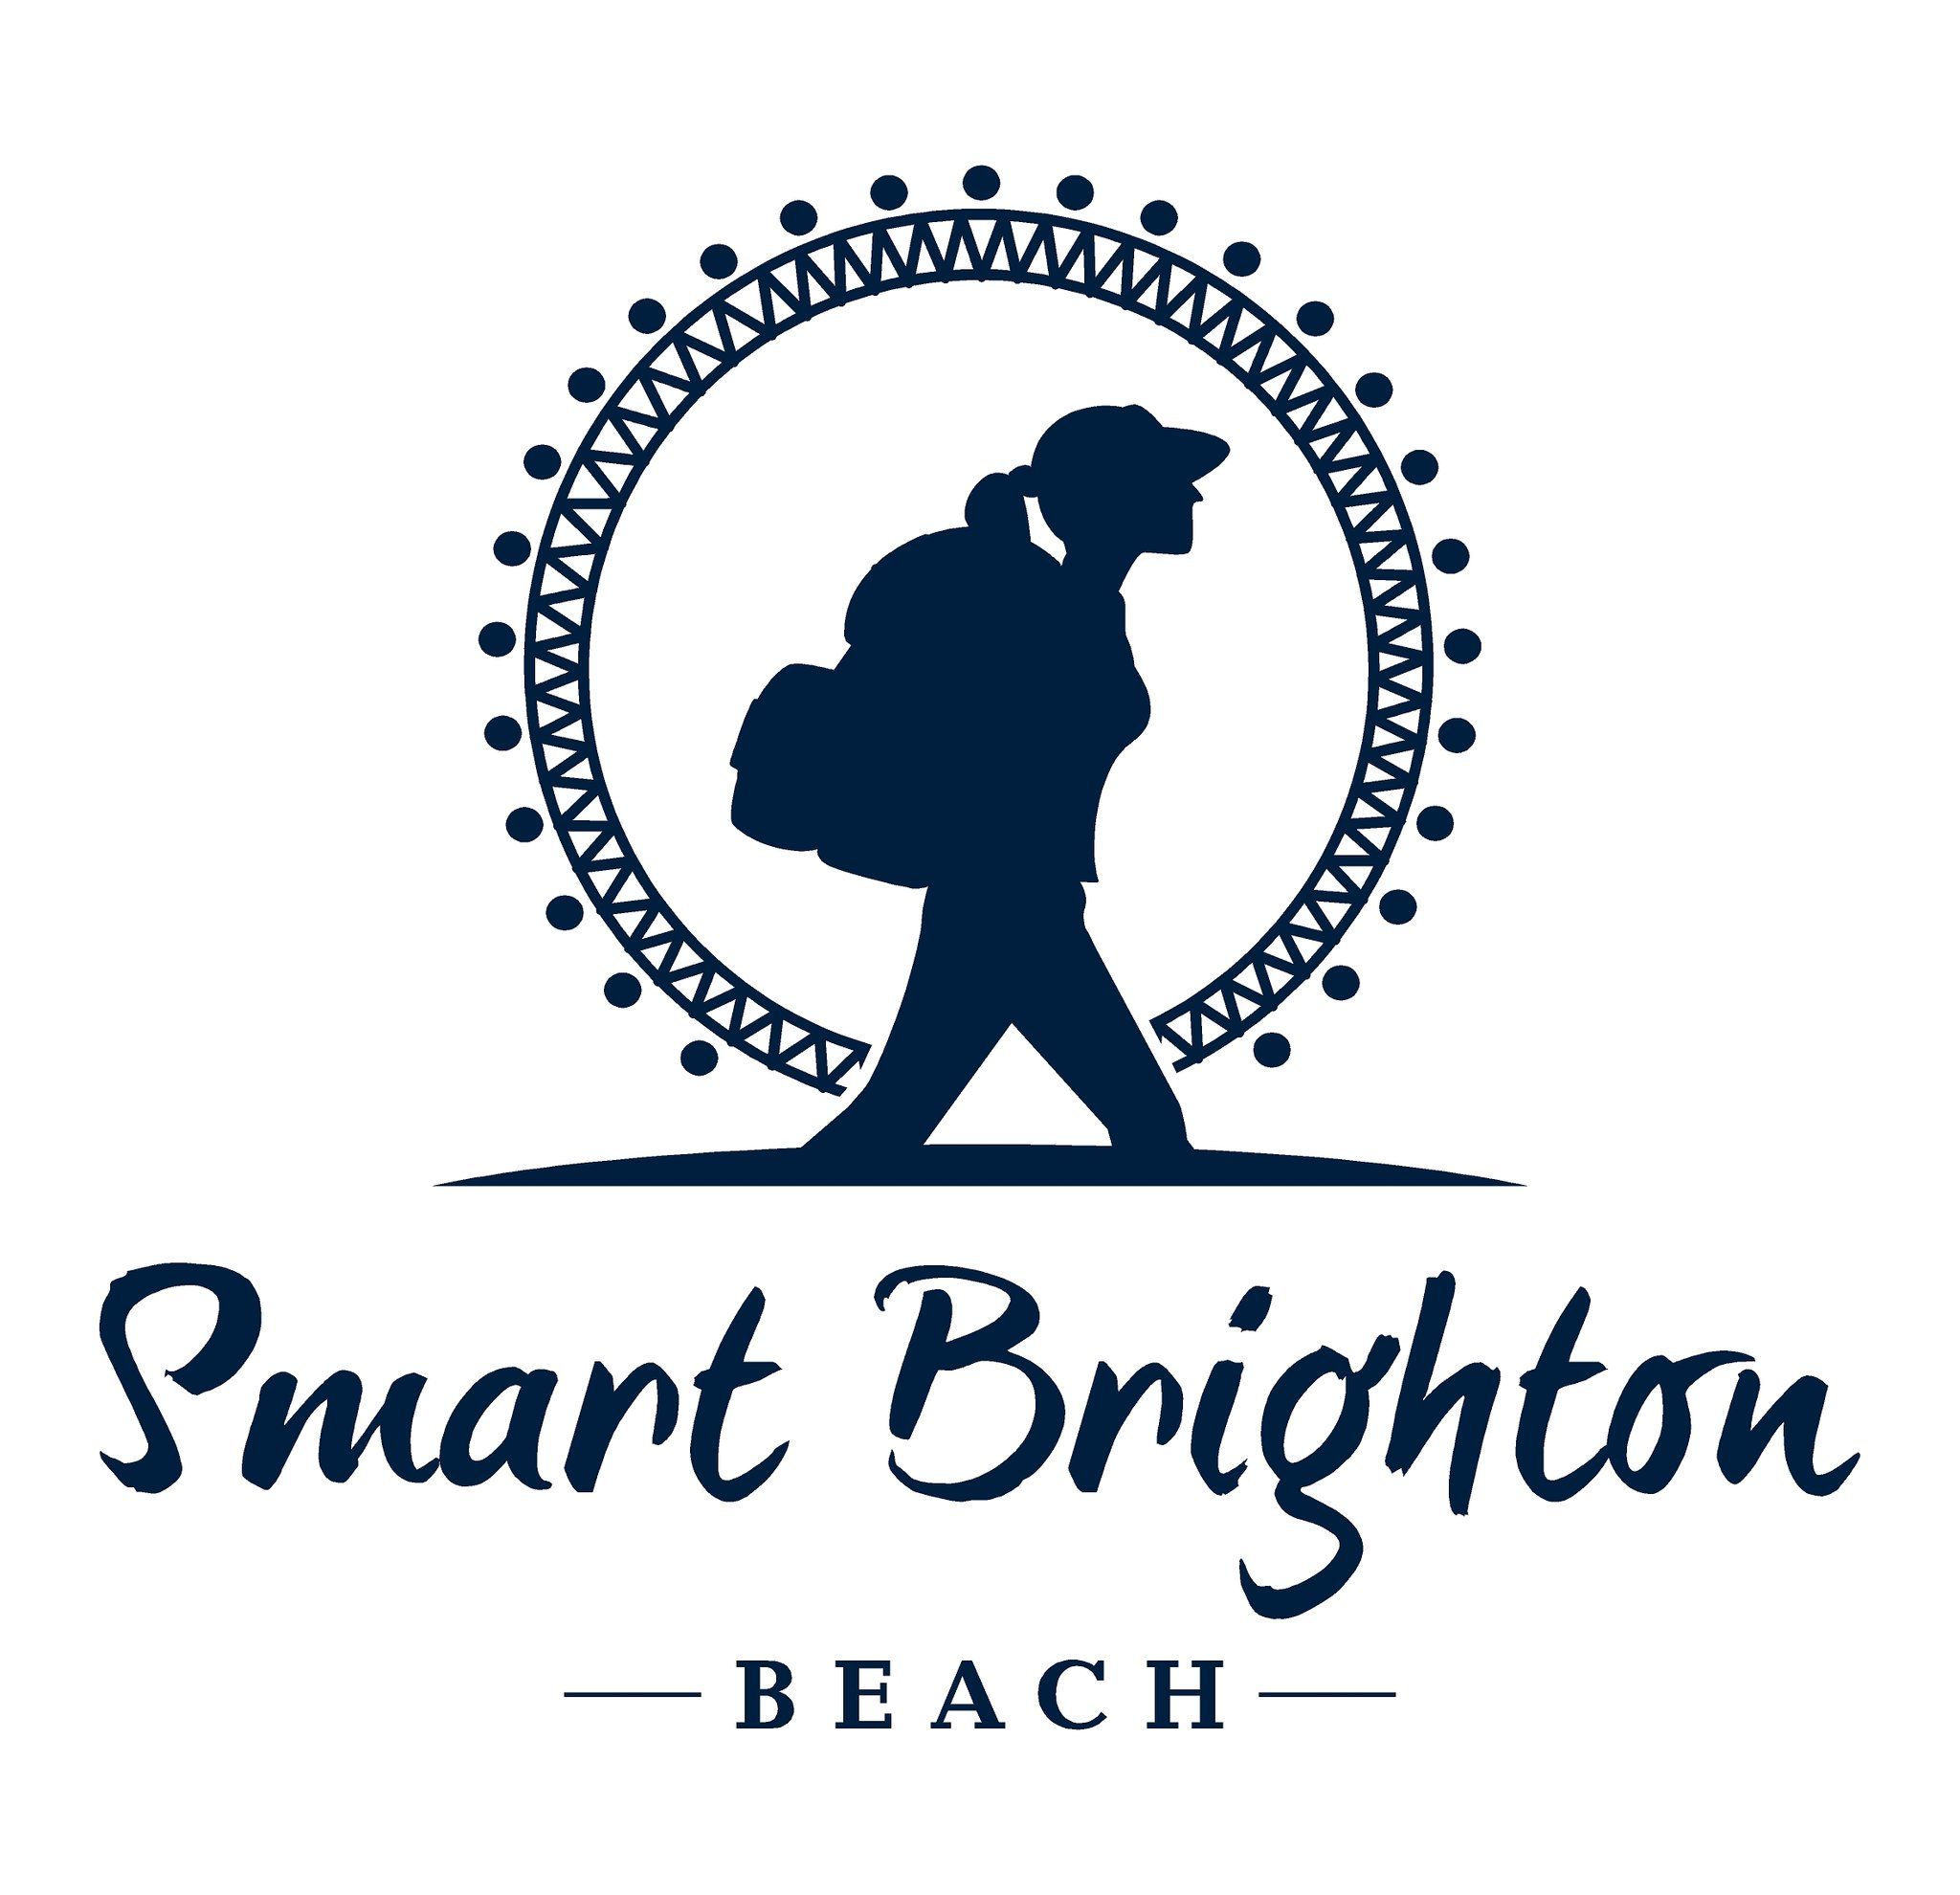 Smart Brighton Beach